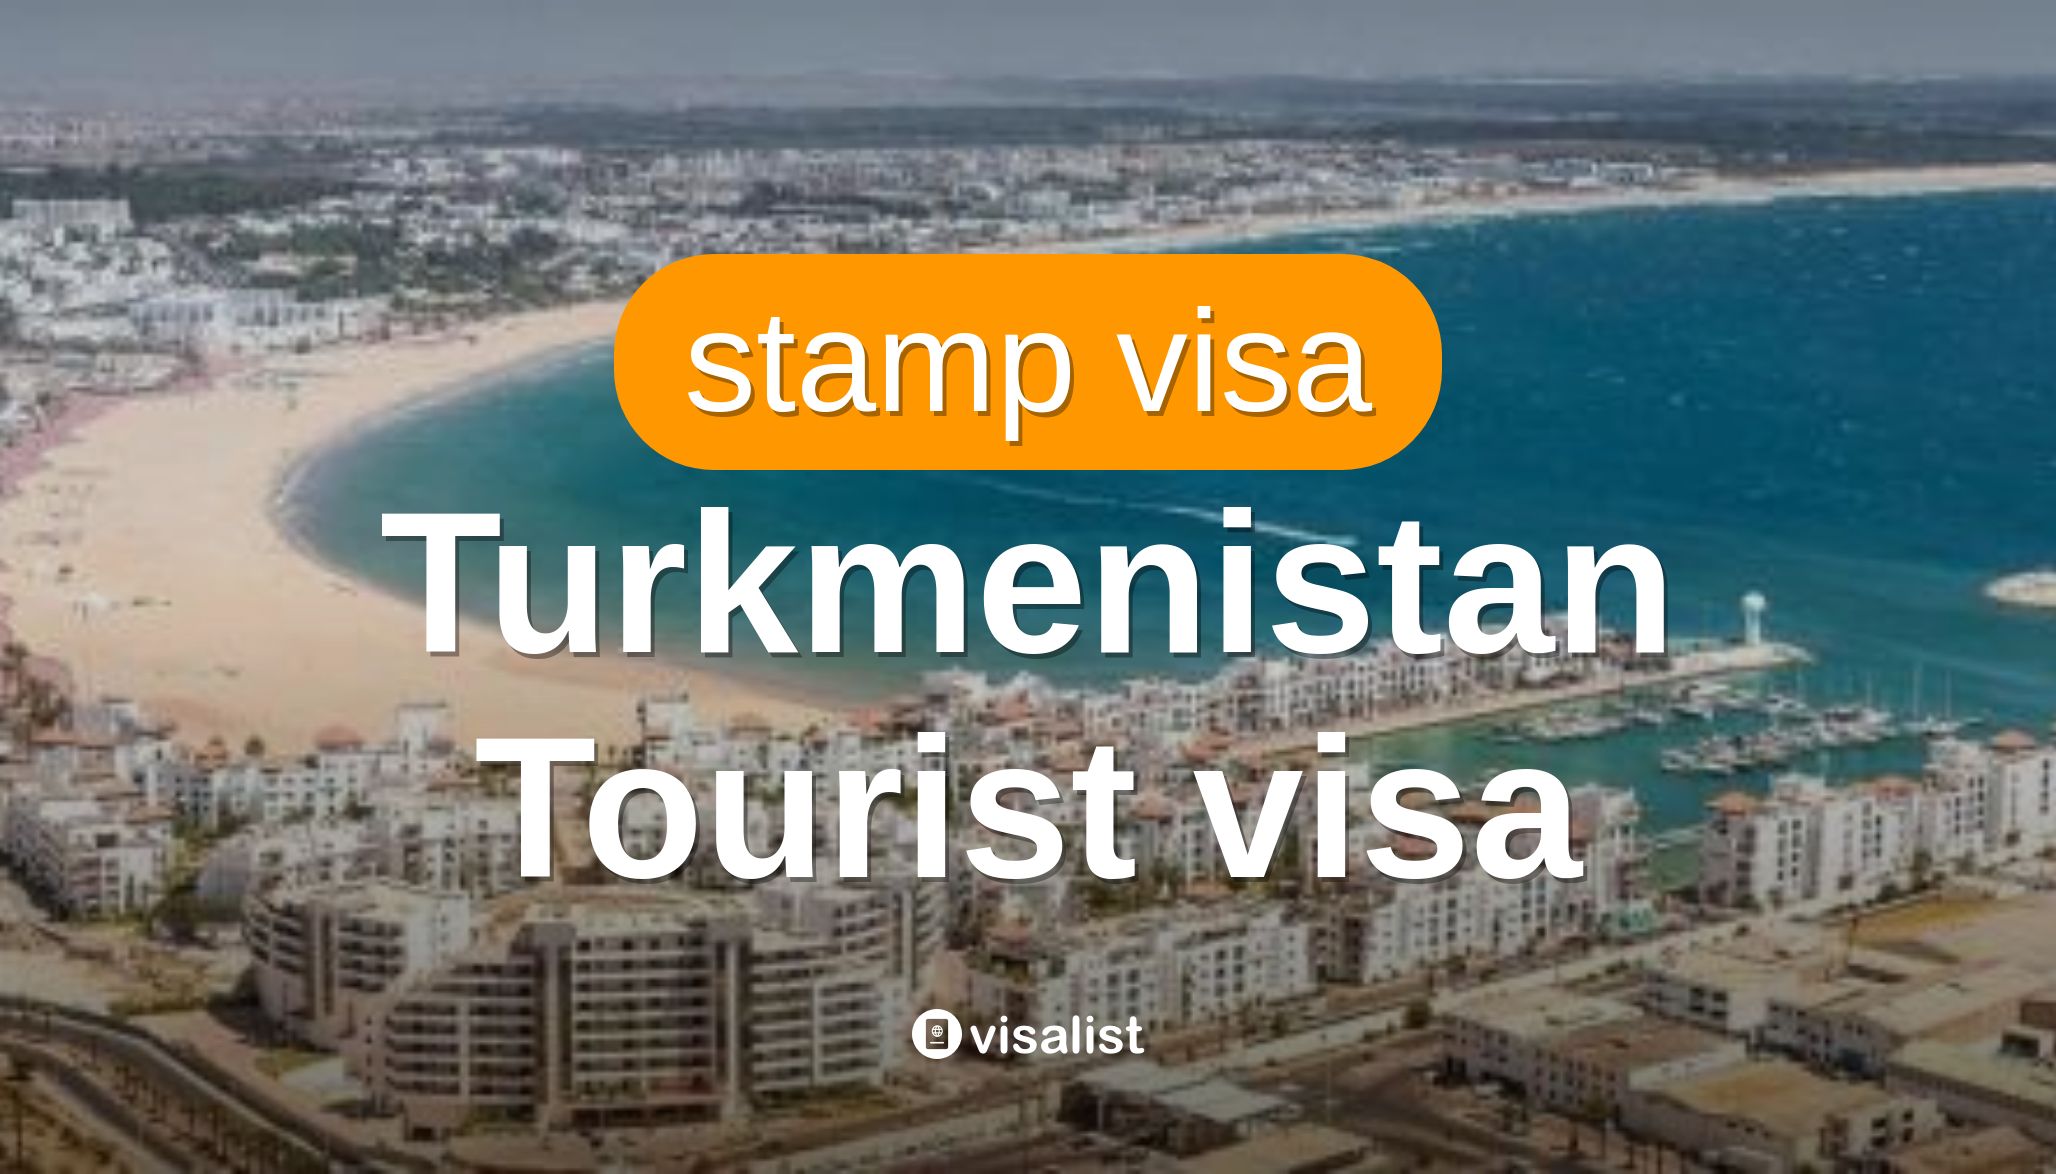 turkmenistan tourist visa for indian